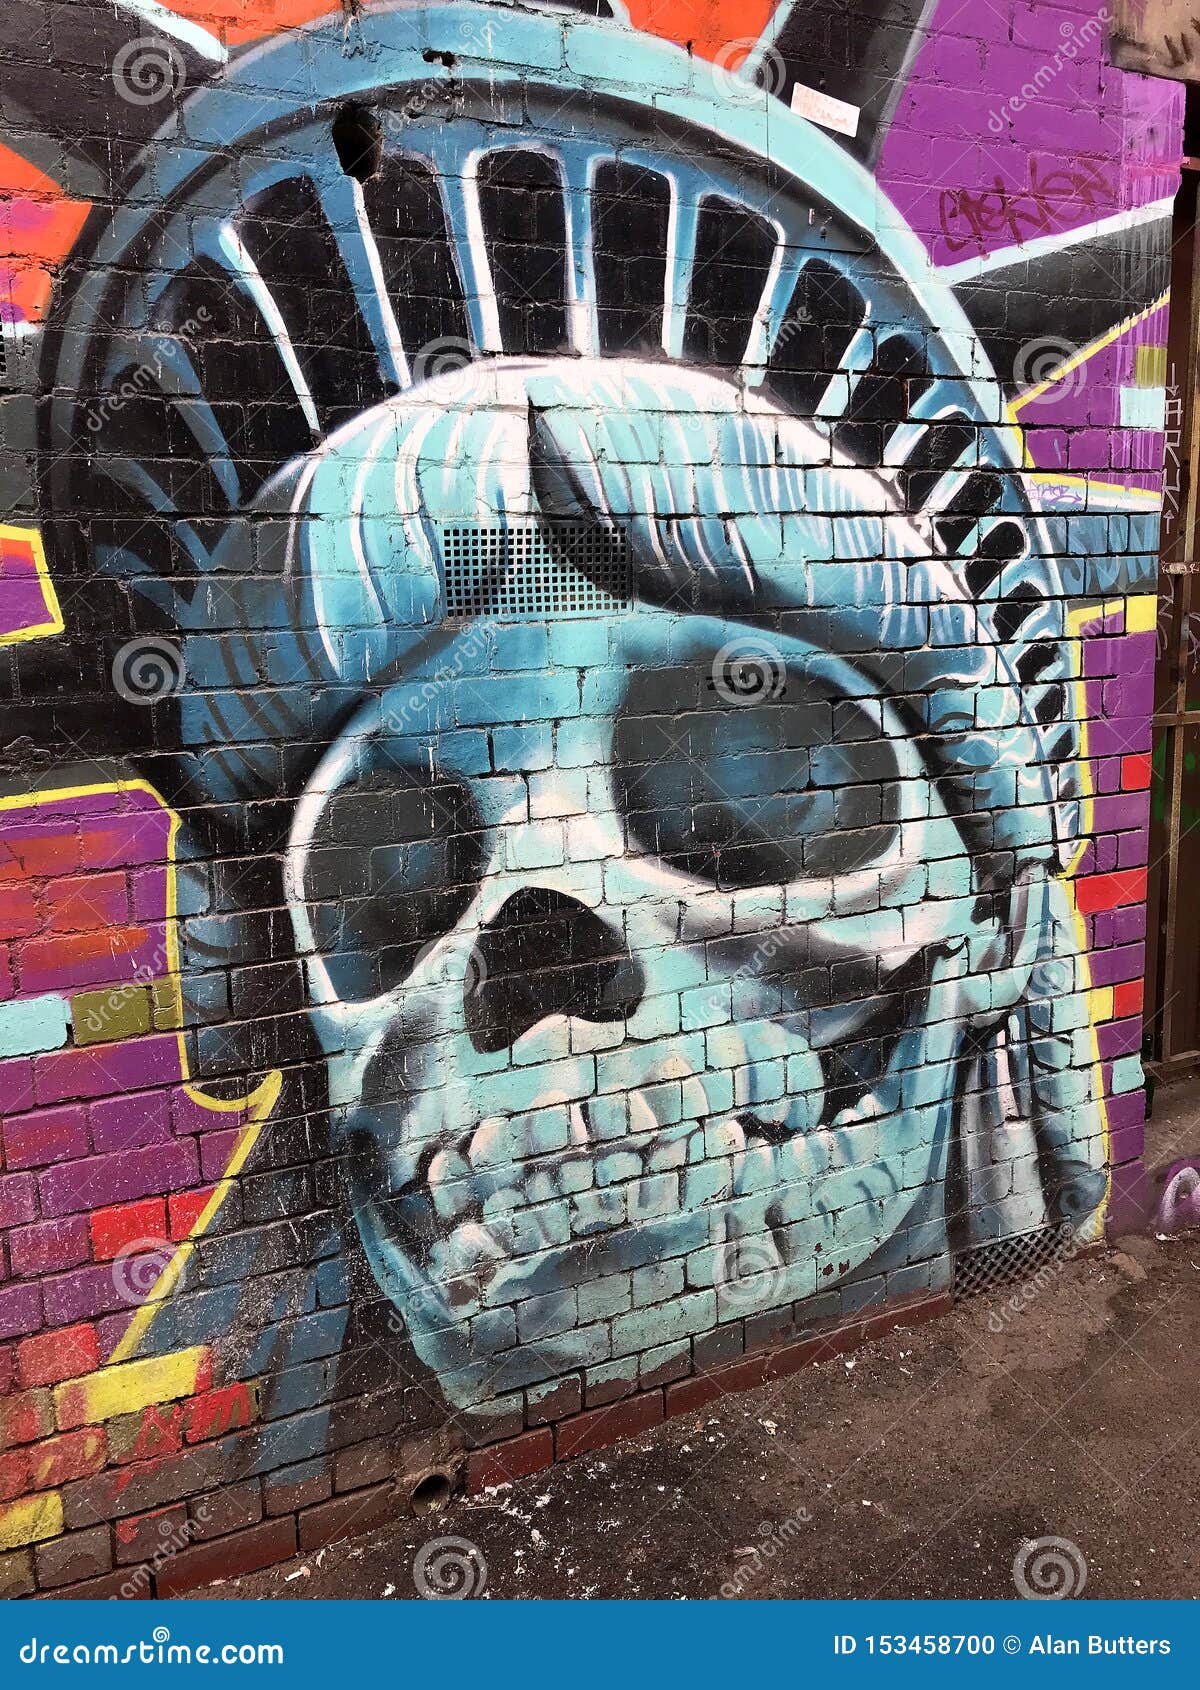 Street Art Skull Statue Of Liberty Editorial Image - Image of bulldogs